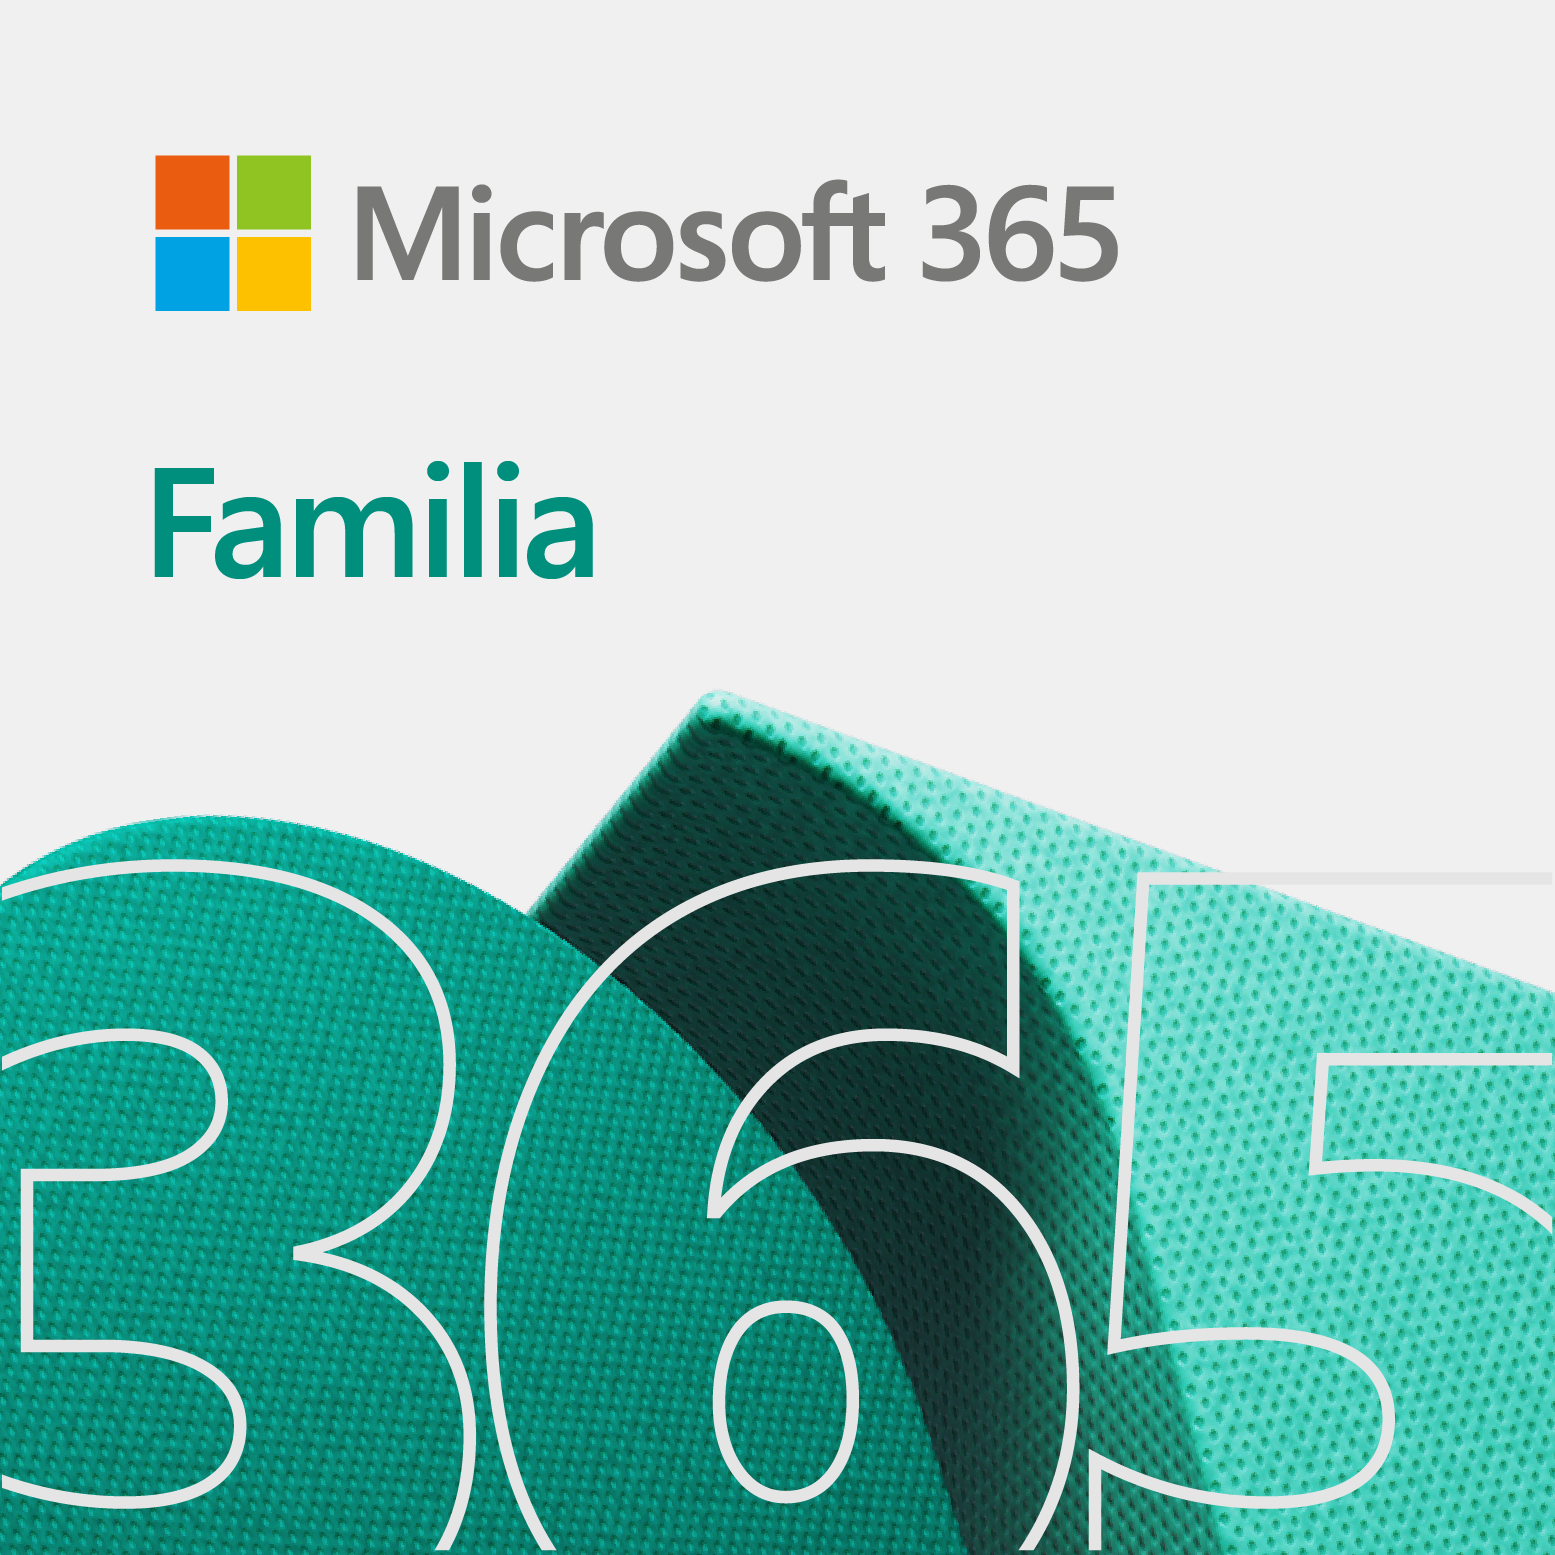 Microsoft 365 Familia - Microsoft Apps